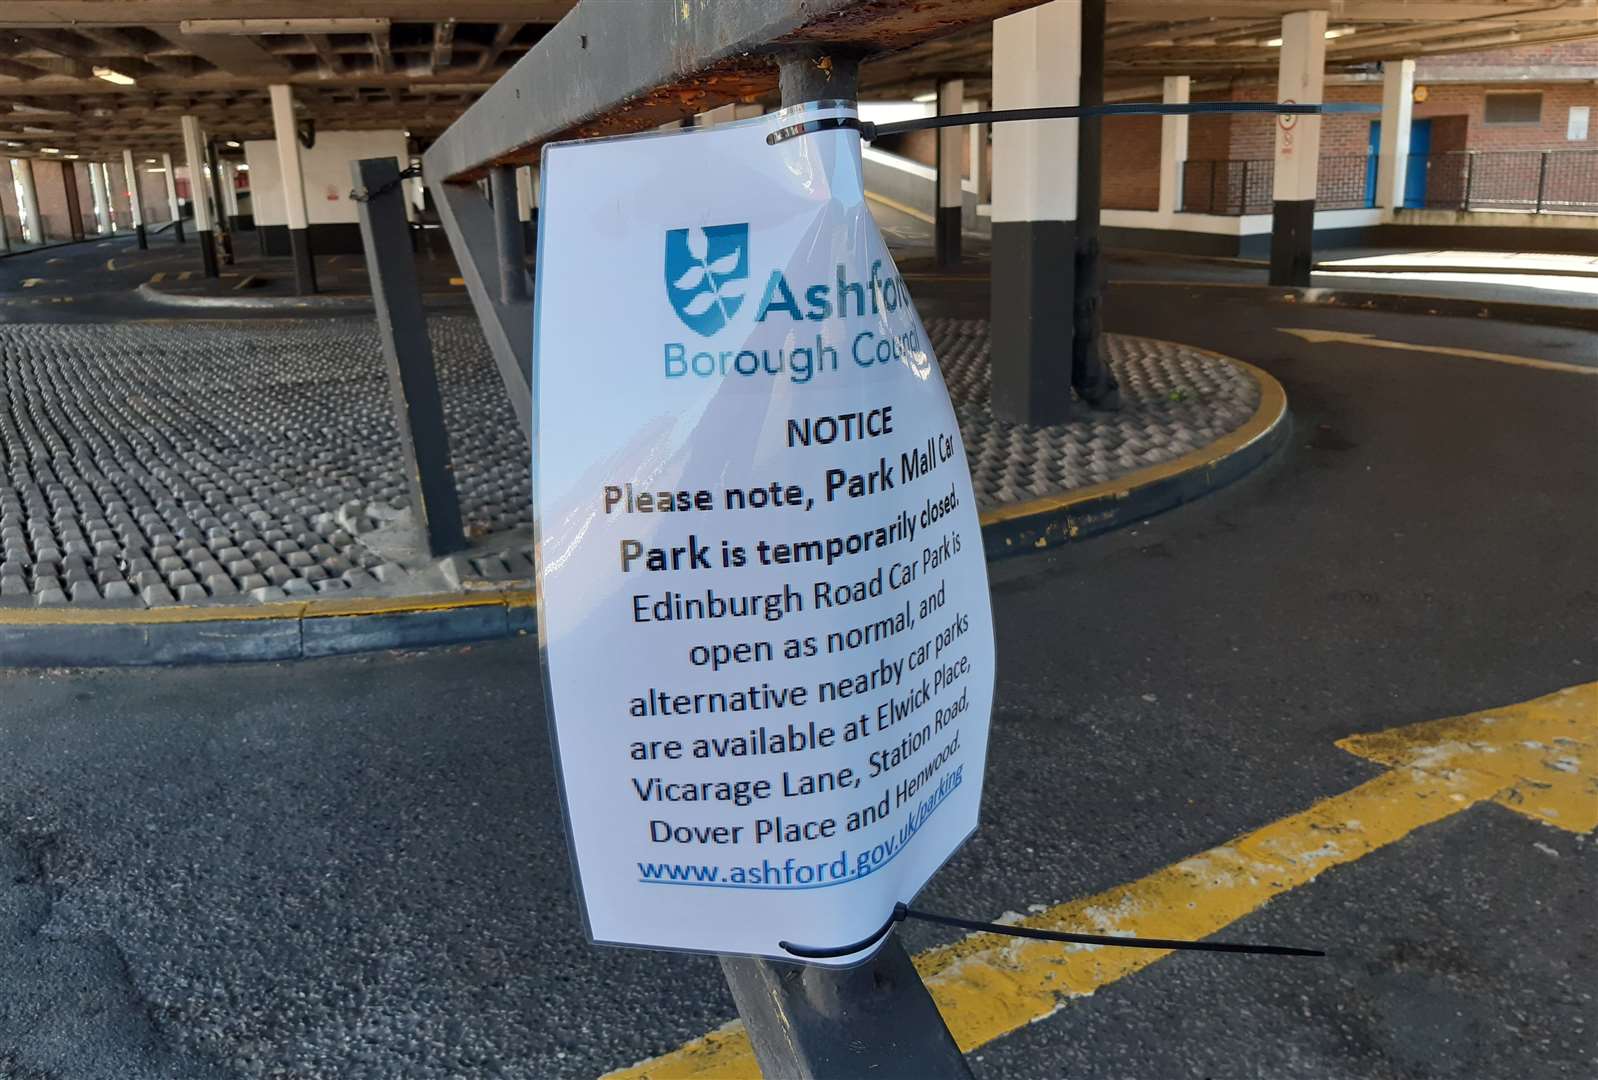 An ABC sign at the car park entrance describes the closure as "temporary"